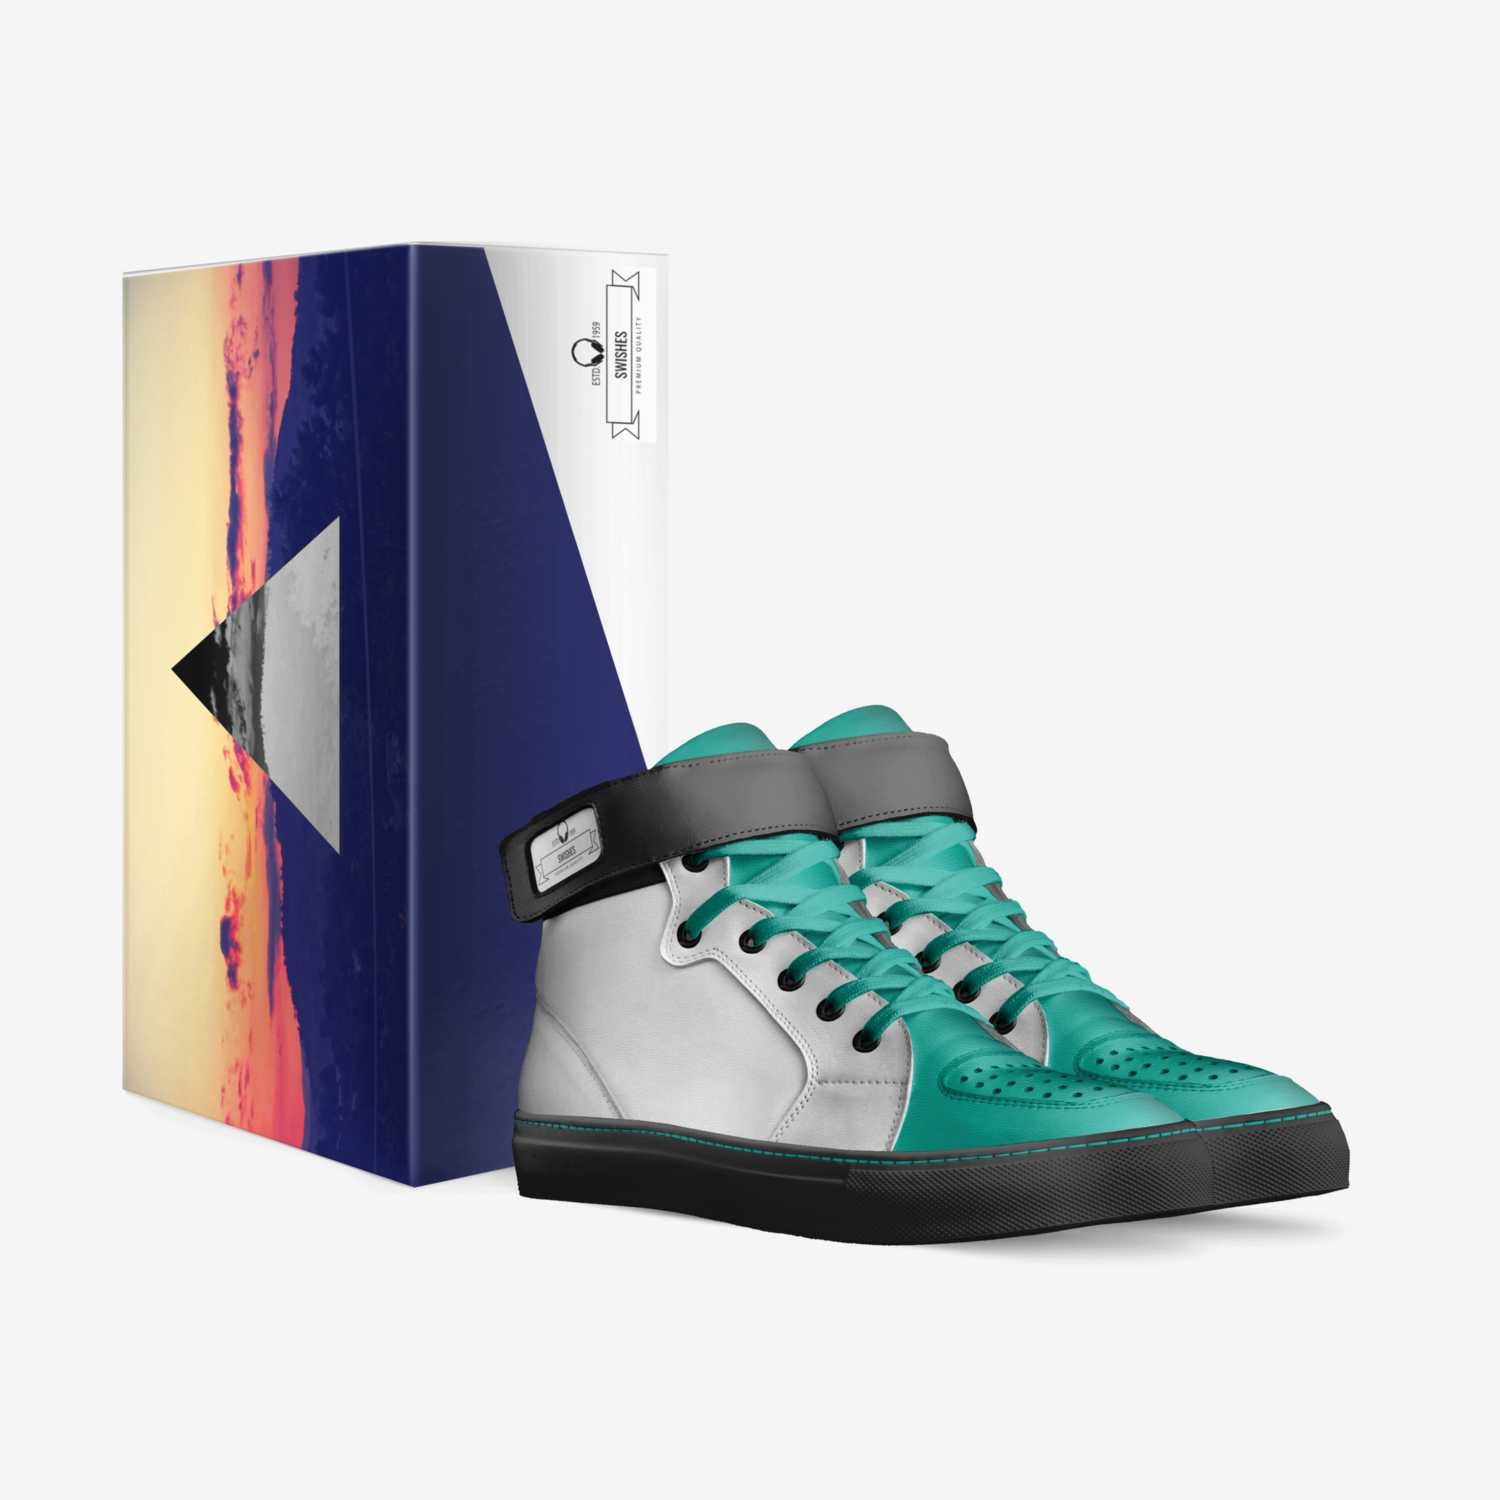 Chris Warner custom made in Italy shoes by Chris Warner | Box view